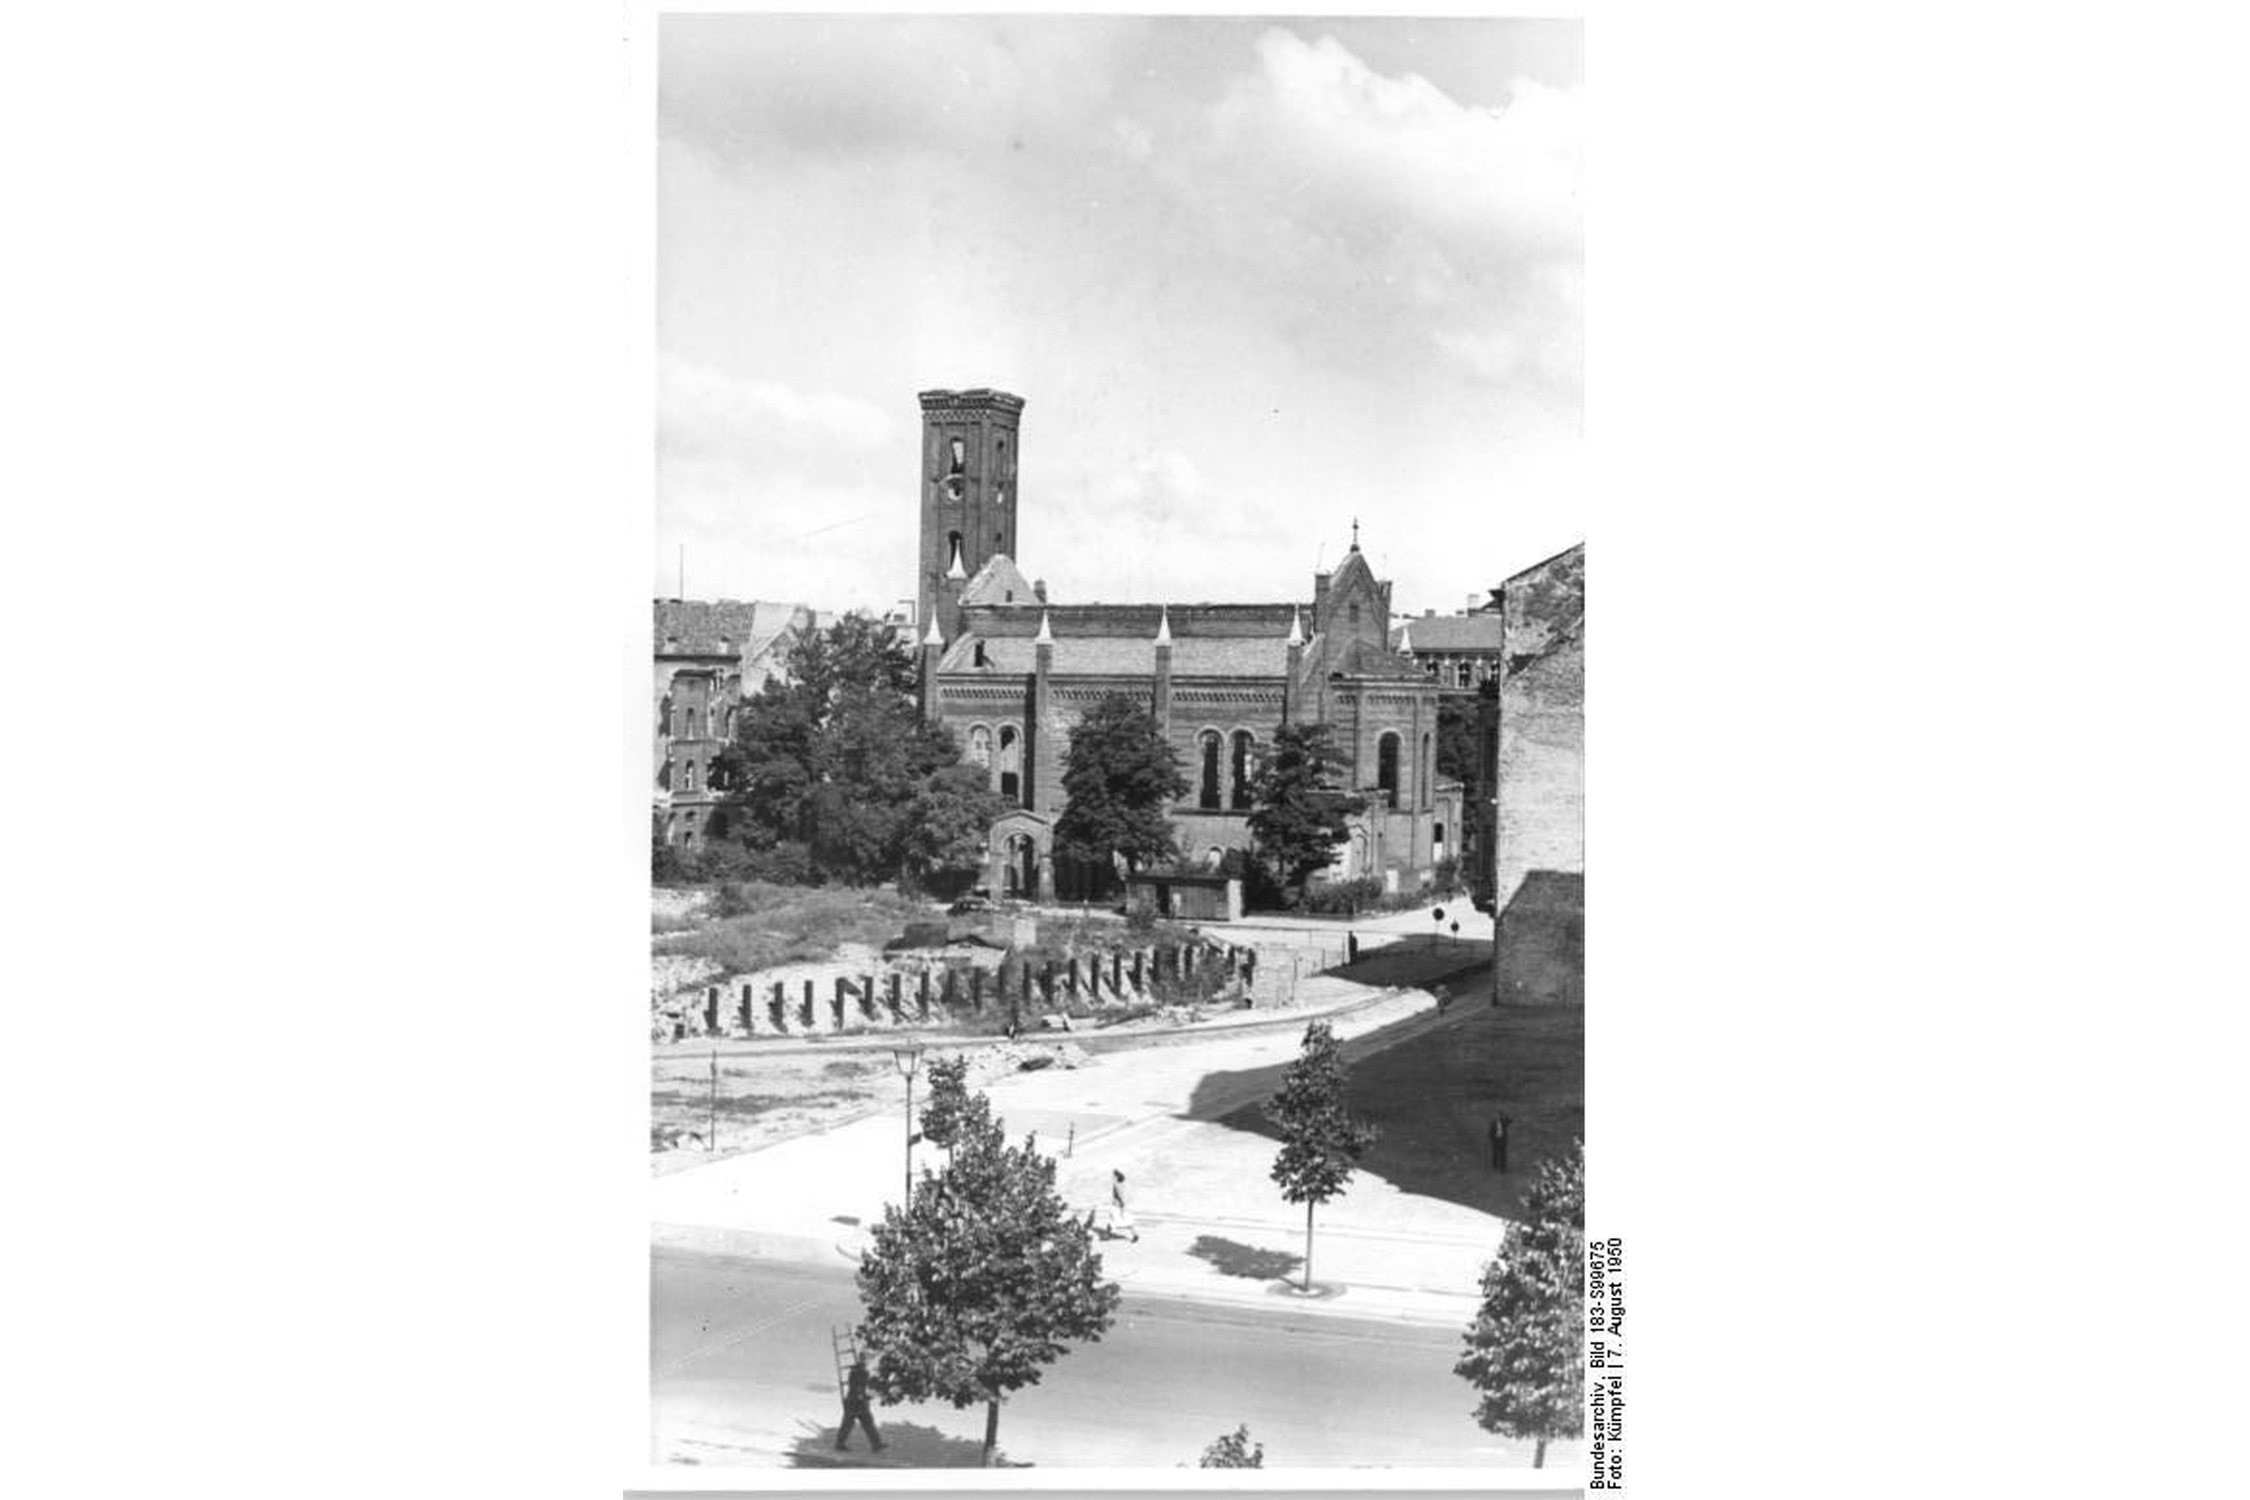 Die Kirche 1950. Foto: Bundesarchiv, Bild 183-S99675/Kümpfel, CC BY-SA 3.0, https://commons.wikimedia.org/w/index.php?curid=5437220